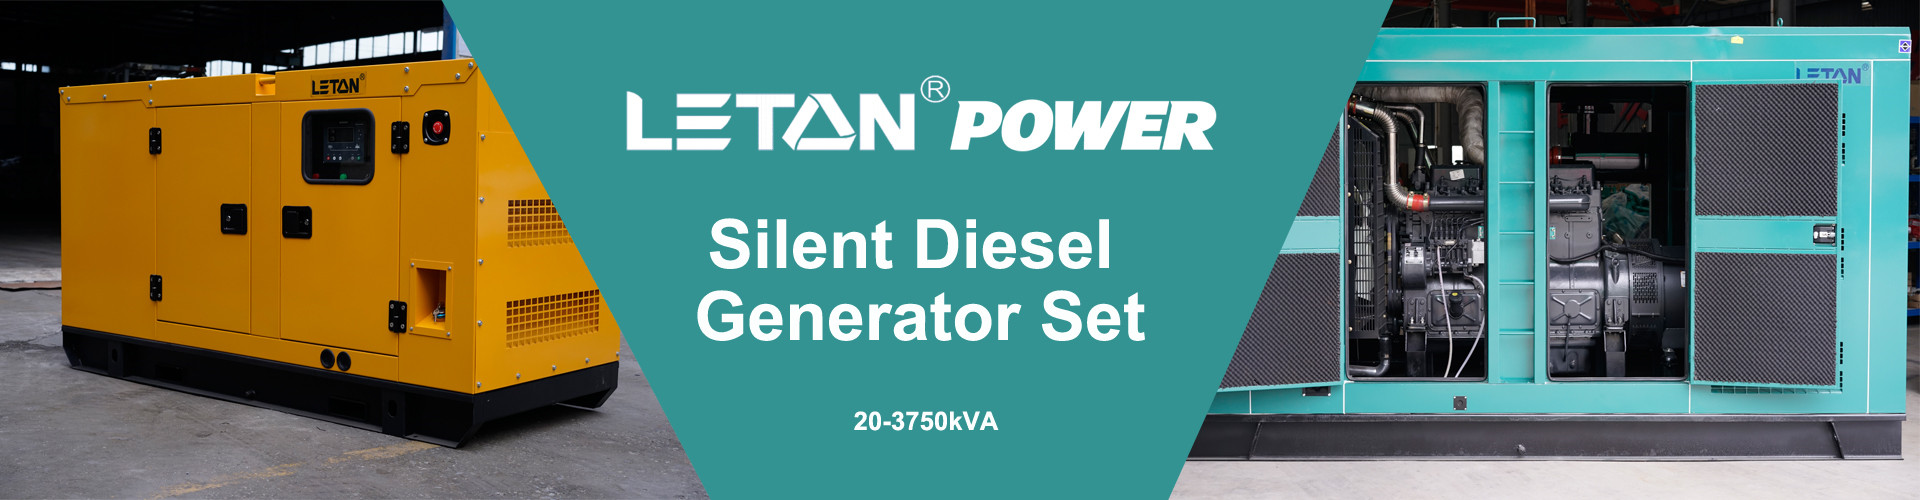 Silent Diesel generator teeb lub suab qis qis generators Leton powerImage